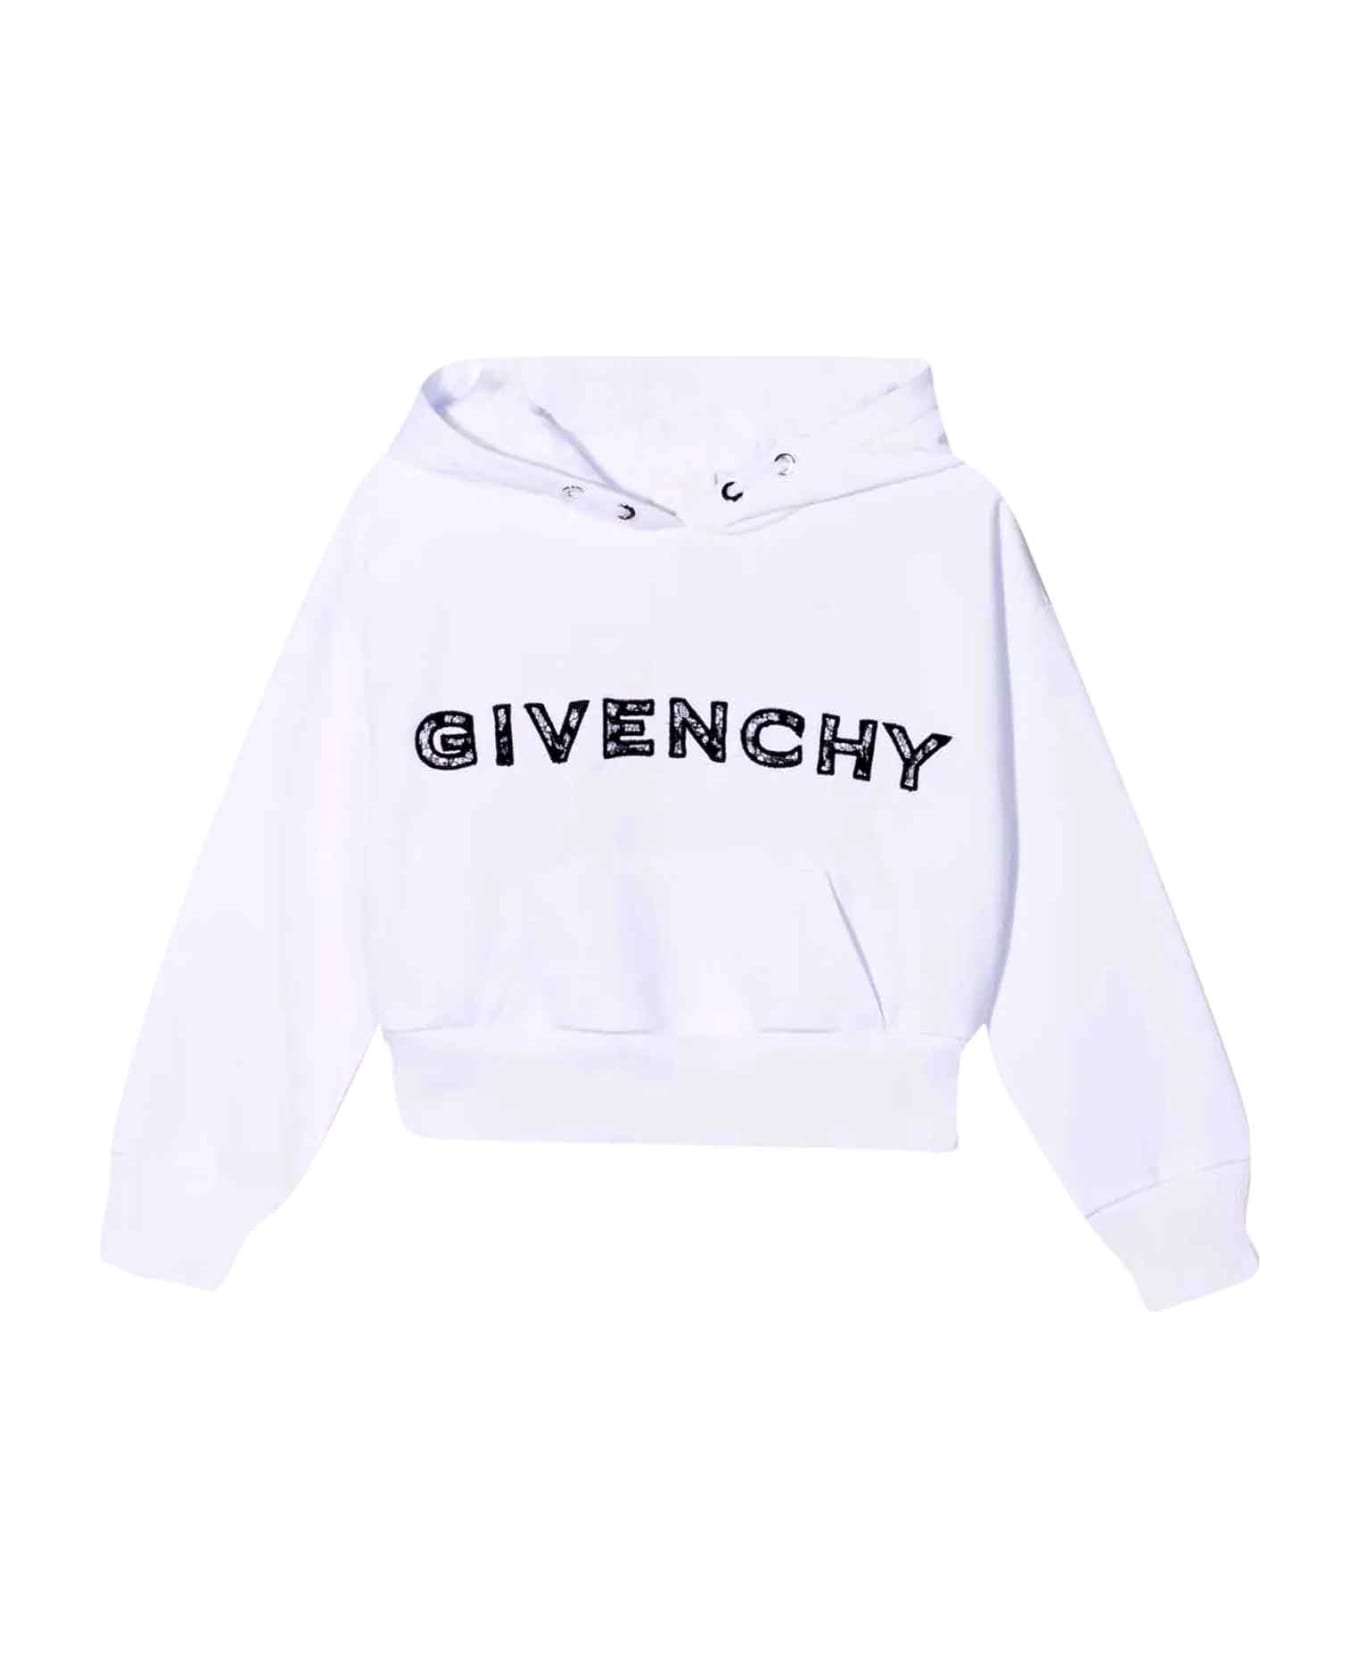 Givenchy White Sweatshirt With Print And Hood - Bianco